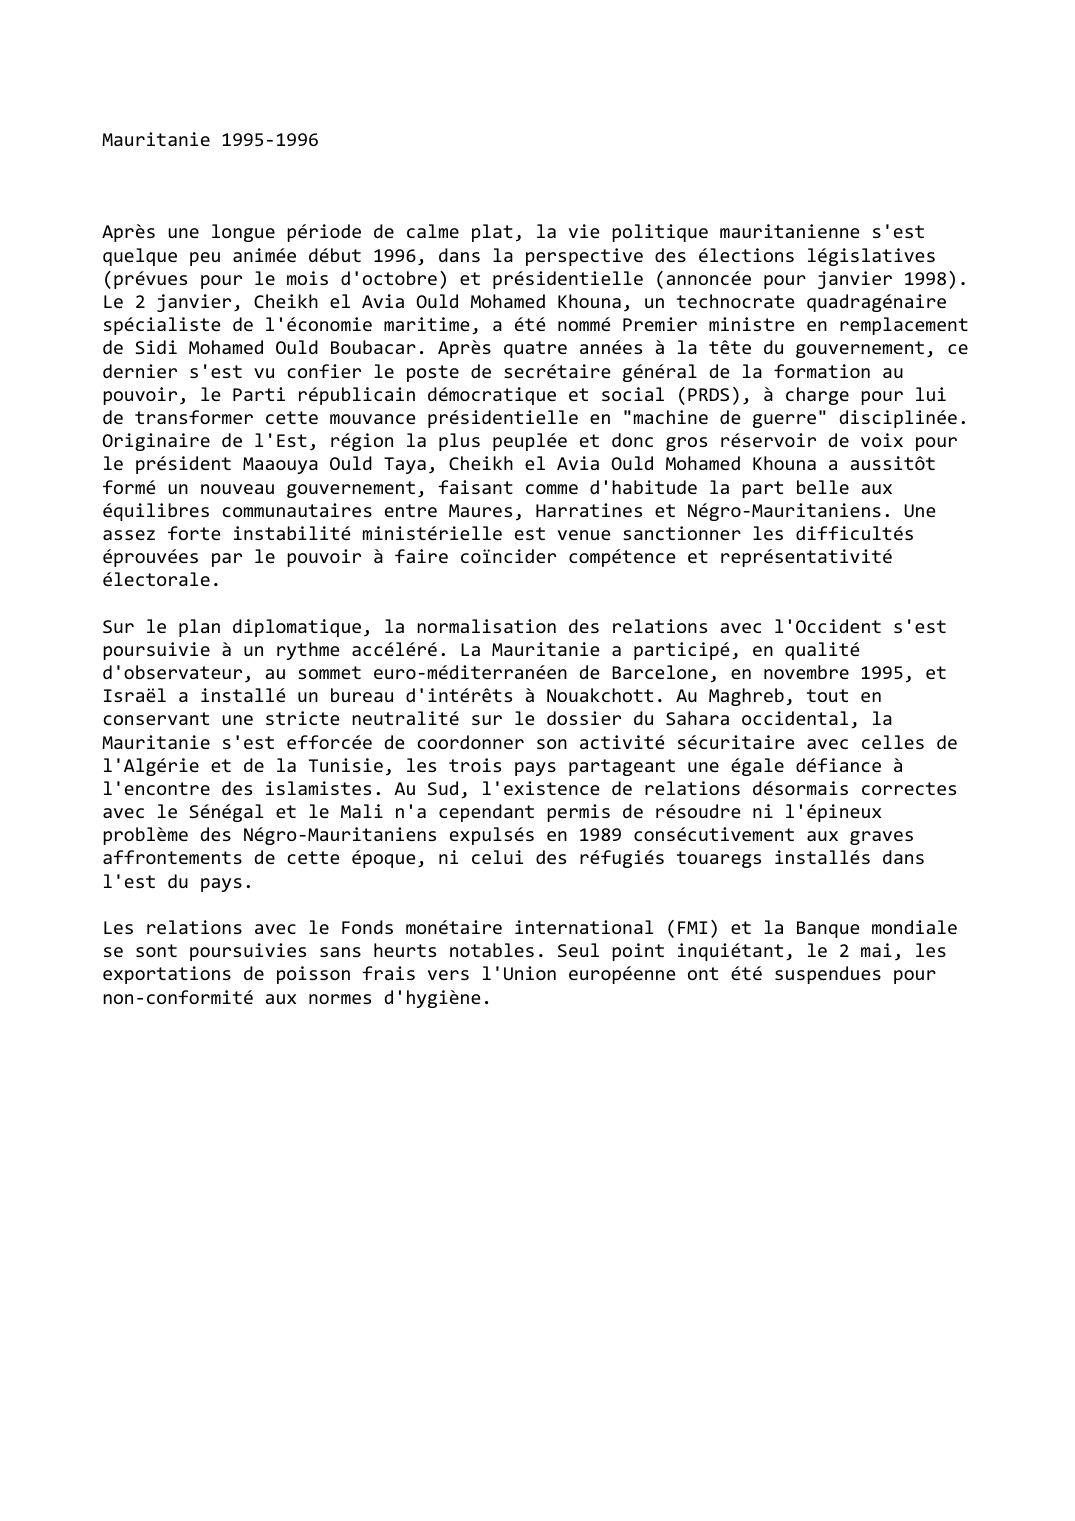 Prévisualisation du document Mauritanie 1995-1996